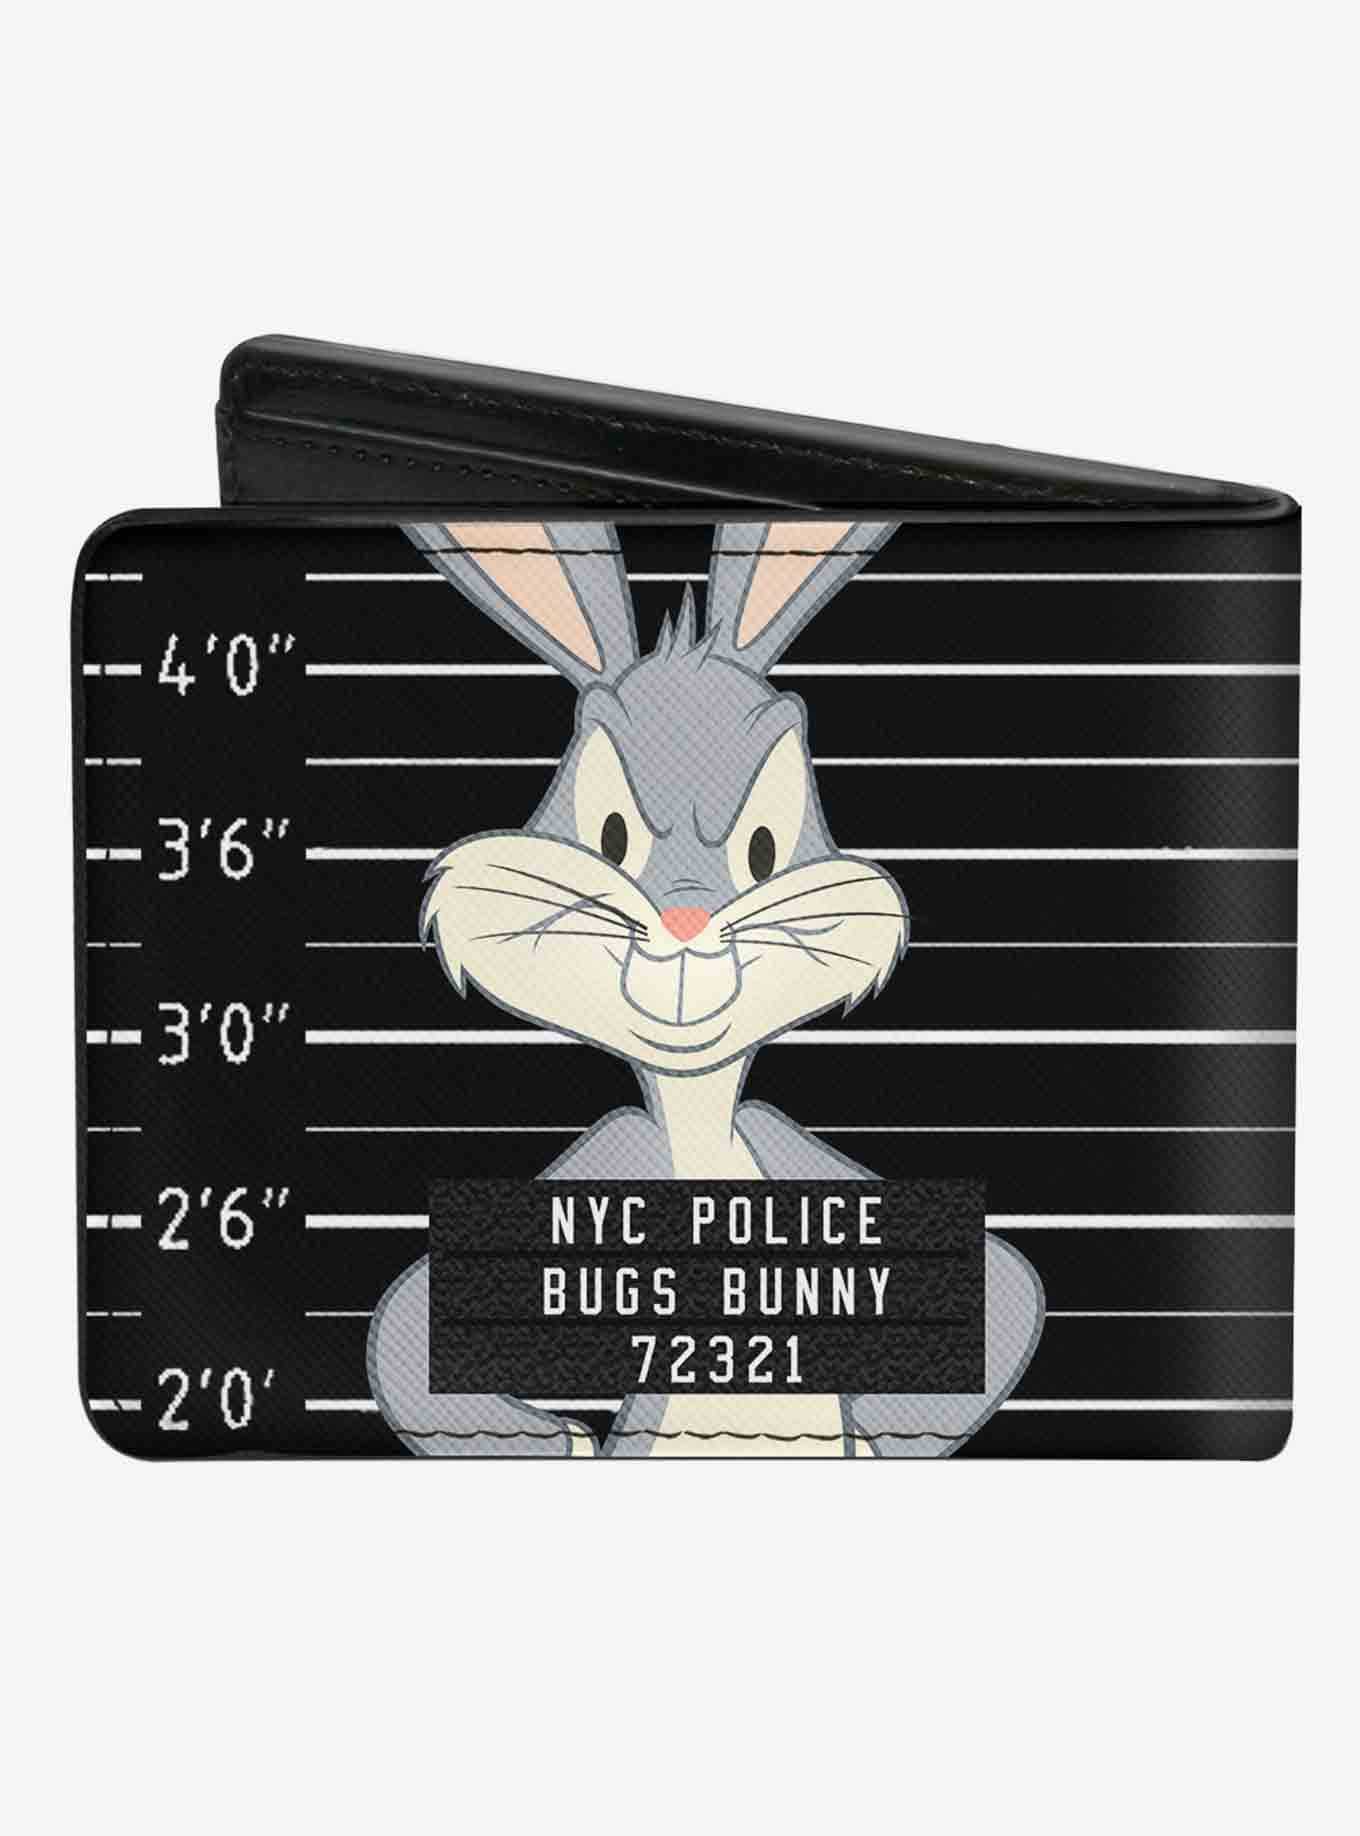 Looney Tunes Bugs Bunny NYC Police Mug Shot Bifold Wallet, , hi-res